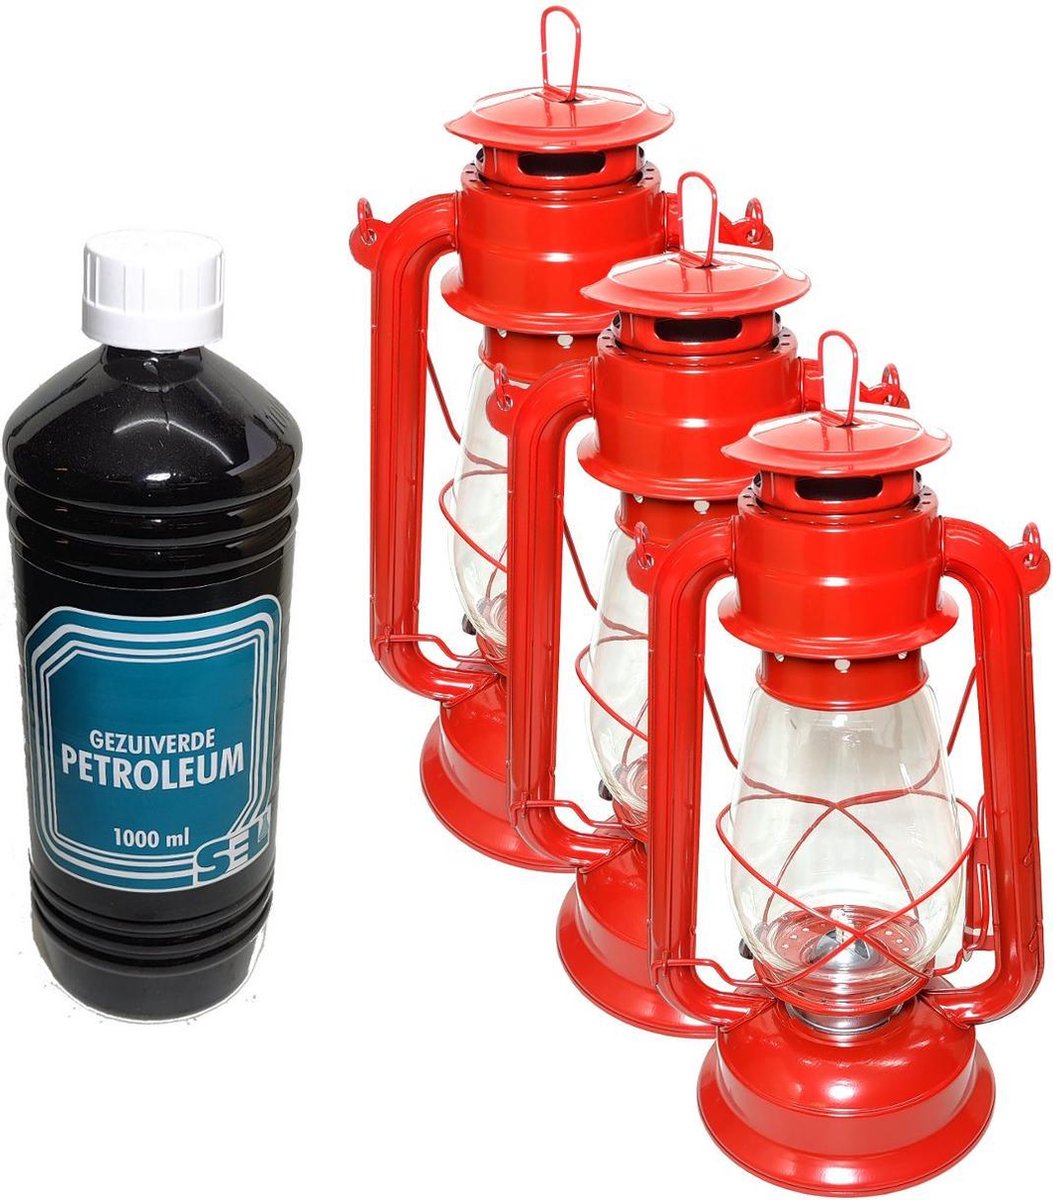 3x Rode Stormlantaarn olielamp windlicht 30cm rood +1 liter fles gezuiverde  petroleum | bol.com